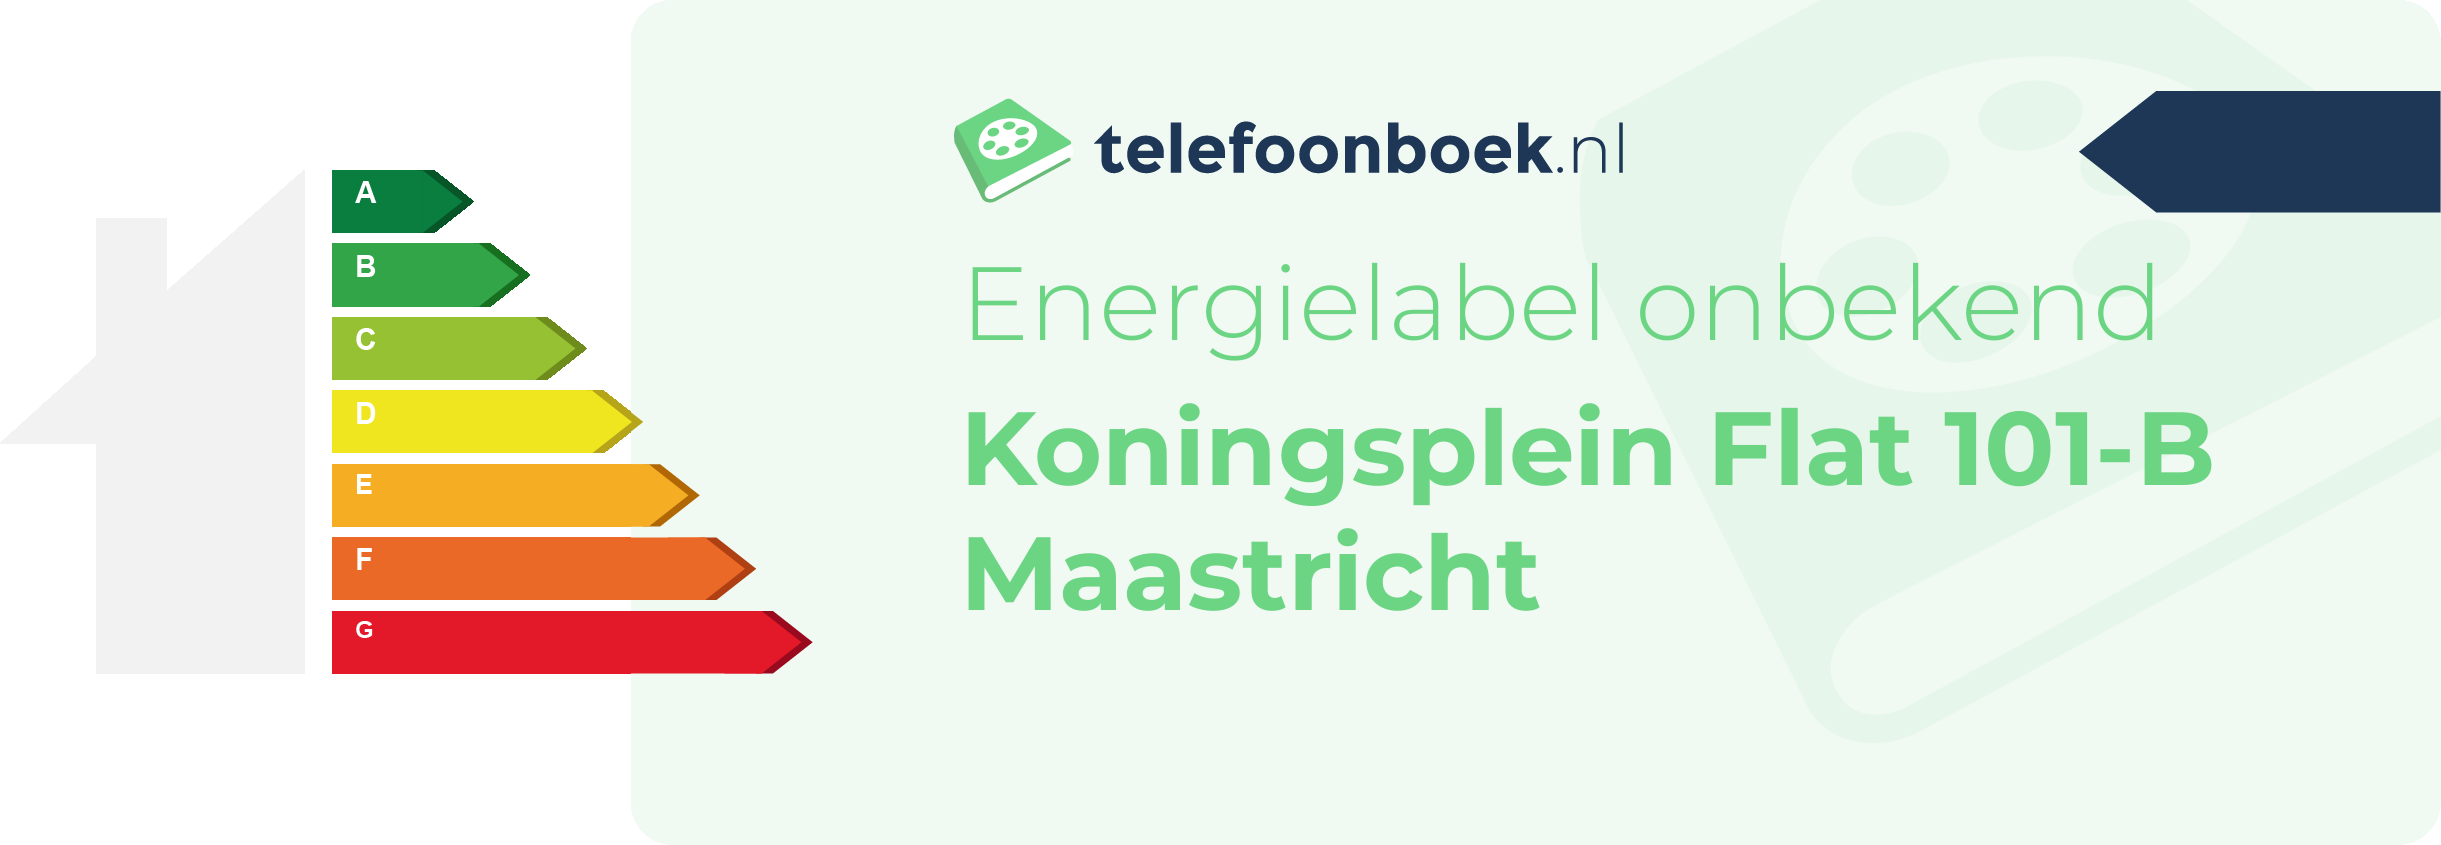 Energielabel Koningsplein Flat 101-B Maastricht